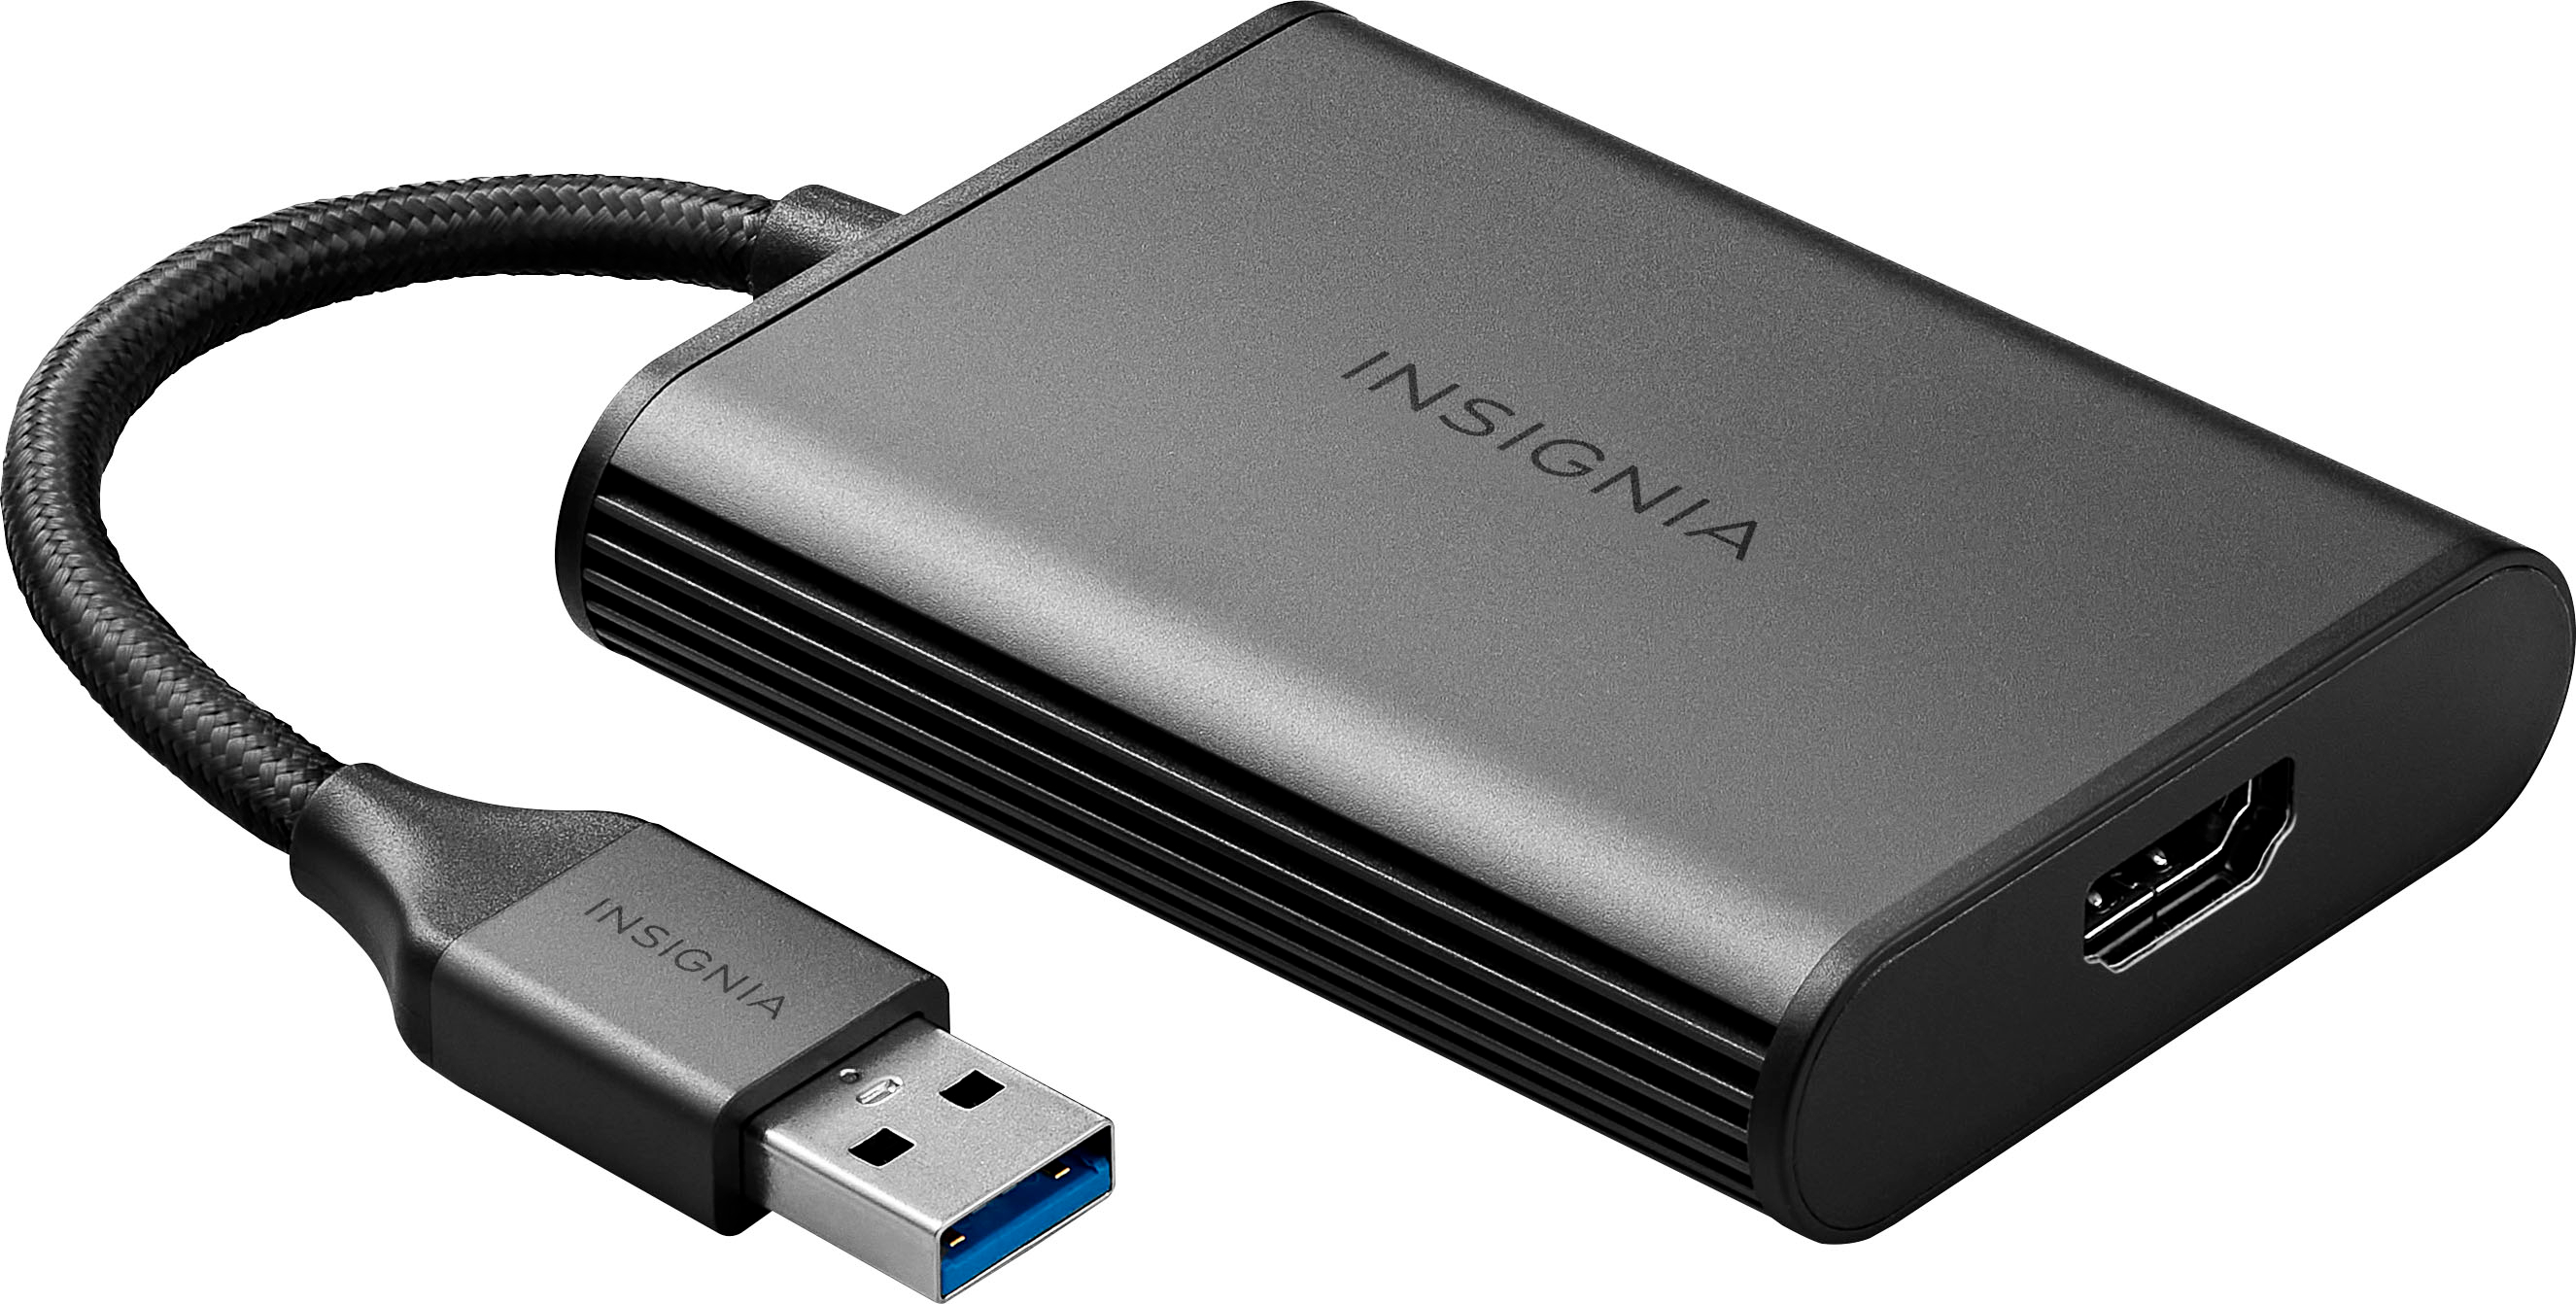 Insignia™ USB-C to HDMI Adapter Black NS-PA3CHD - Best Buy